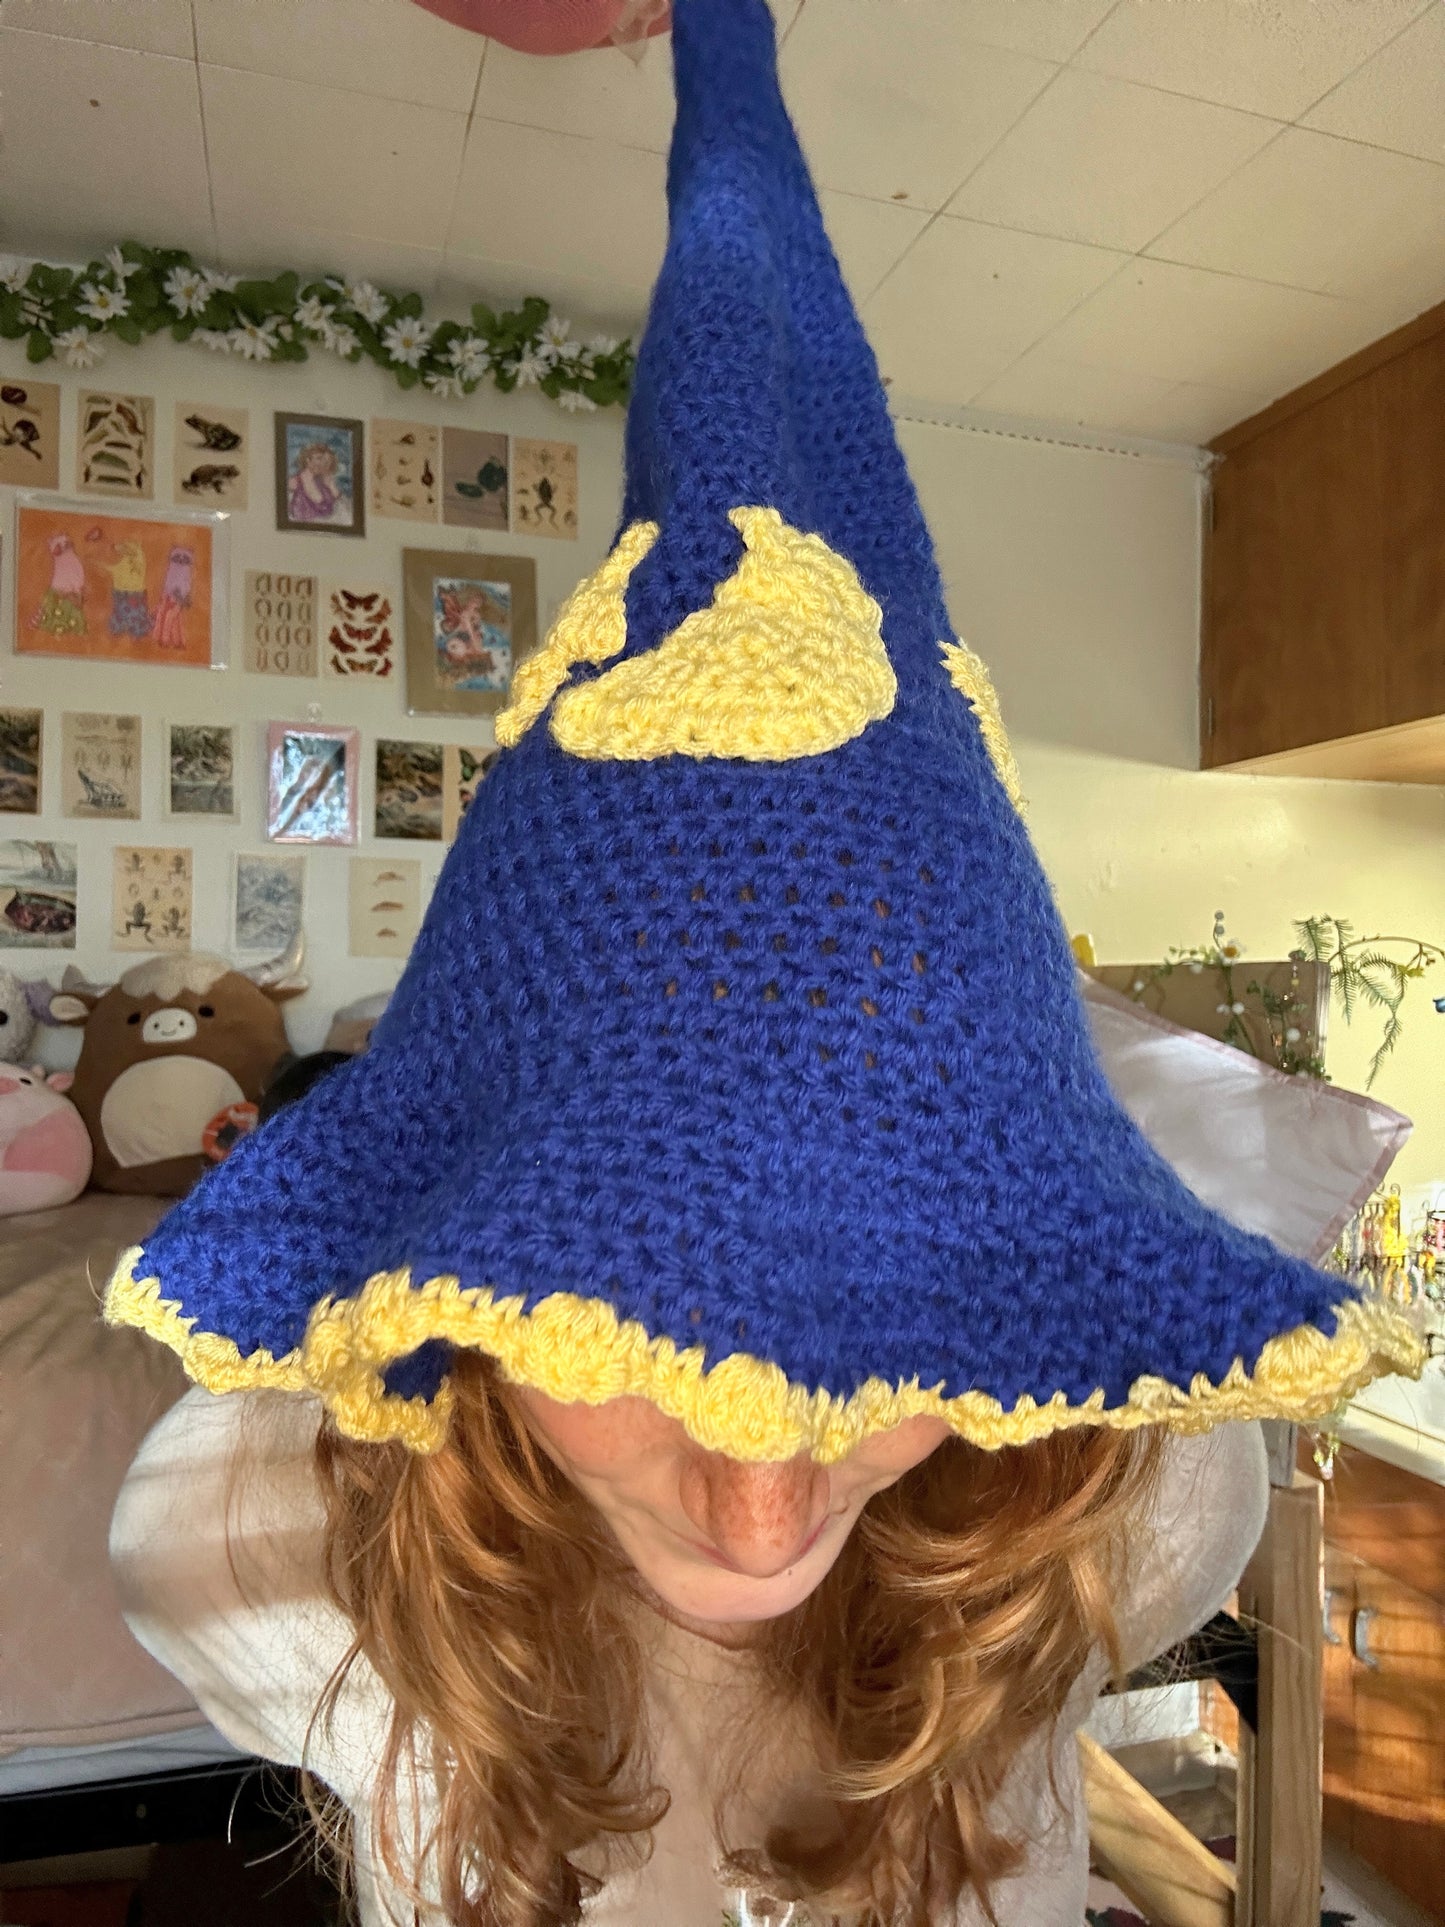 Awesome floppy starry sky wizard hat